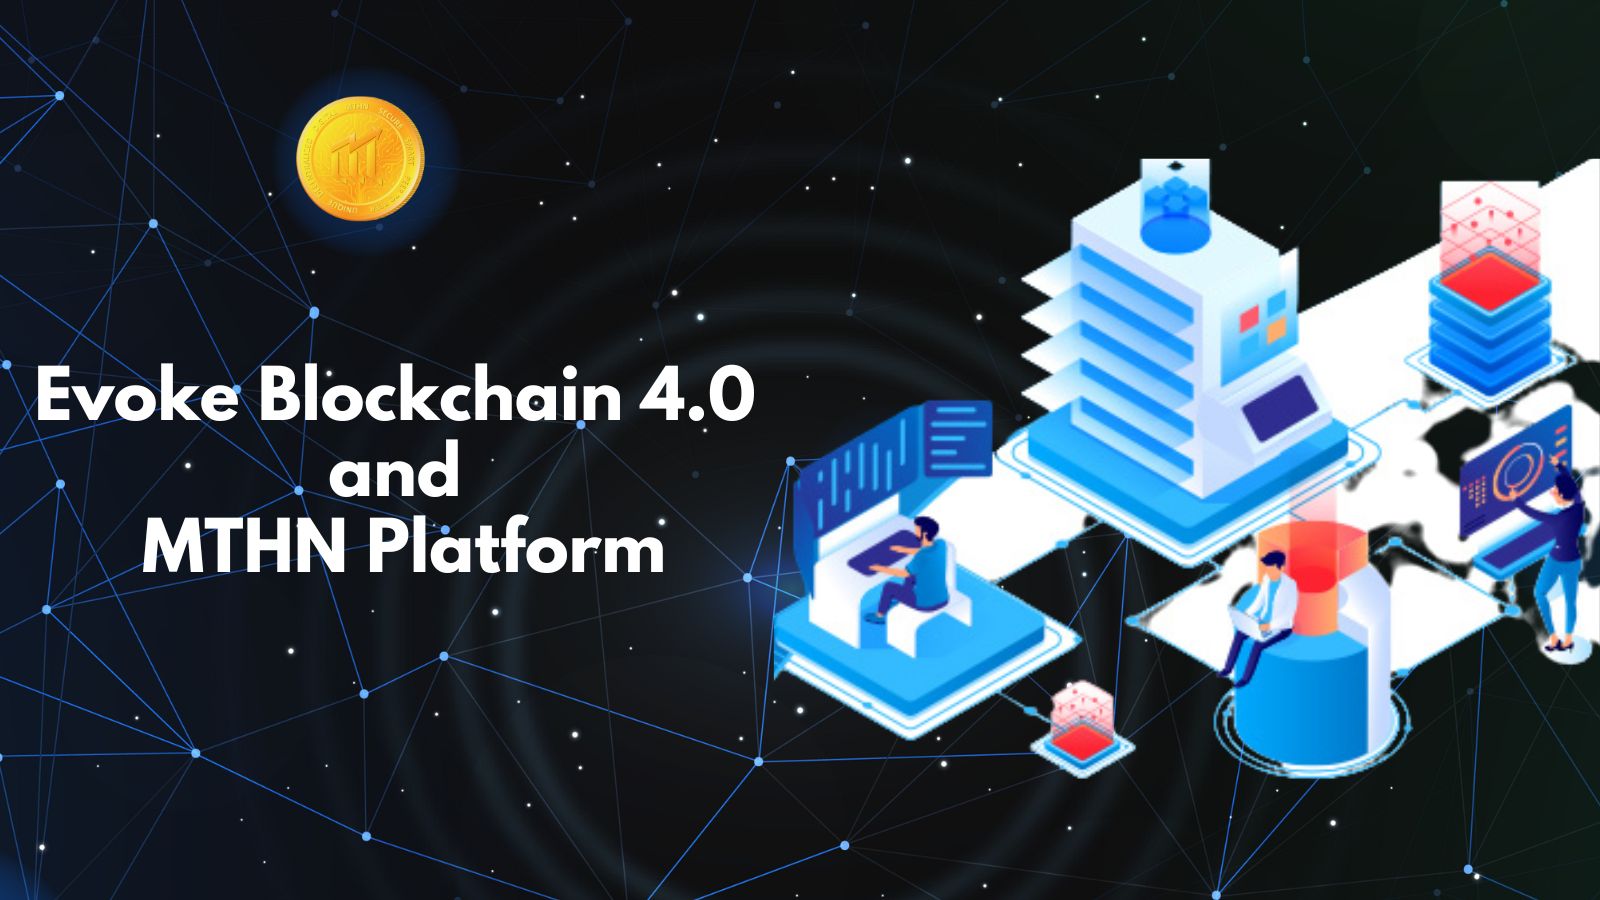 What is Evoke Blockchain 4.0 and MTHN Platform